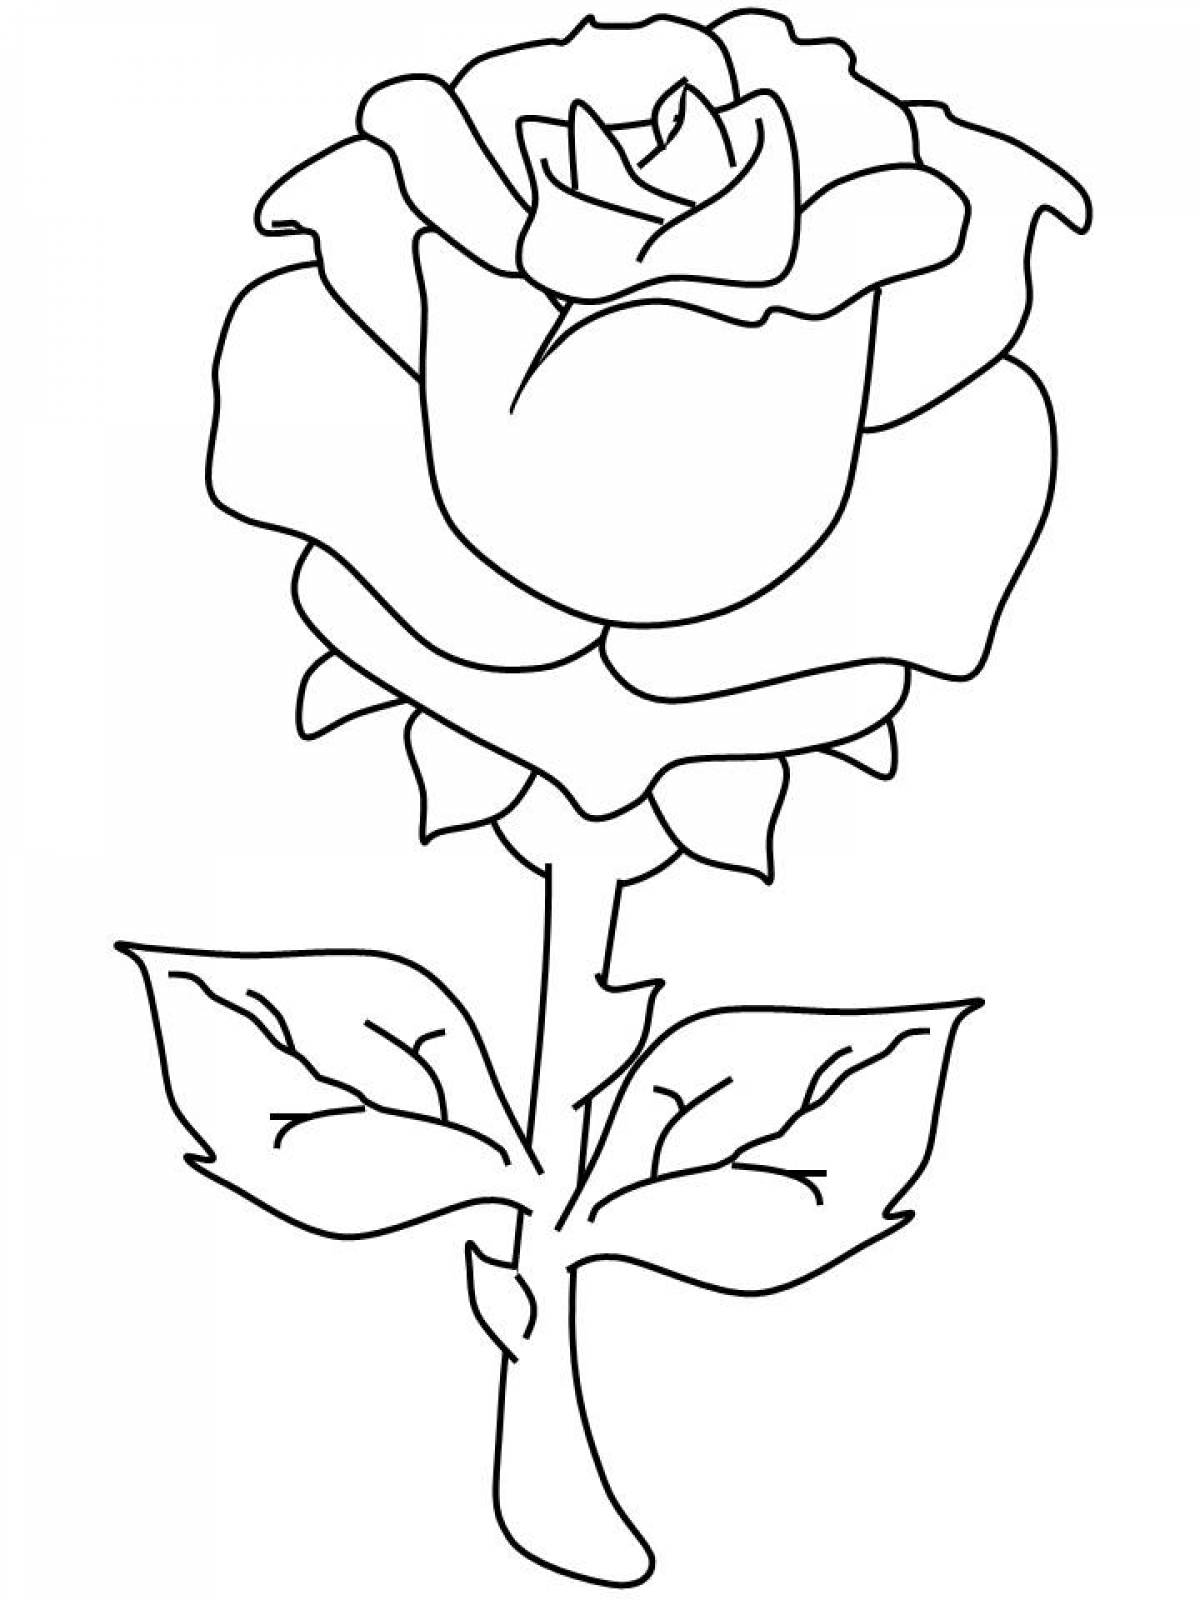 Красочная раскраска роза для детей